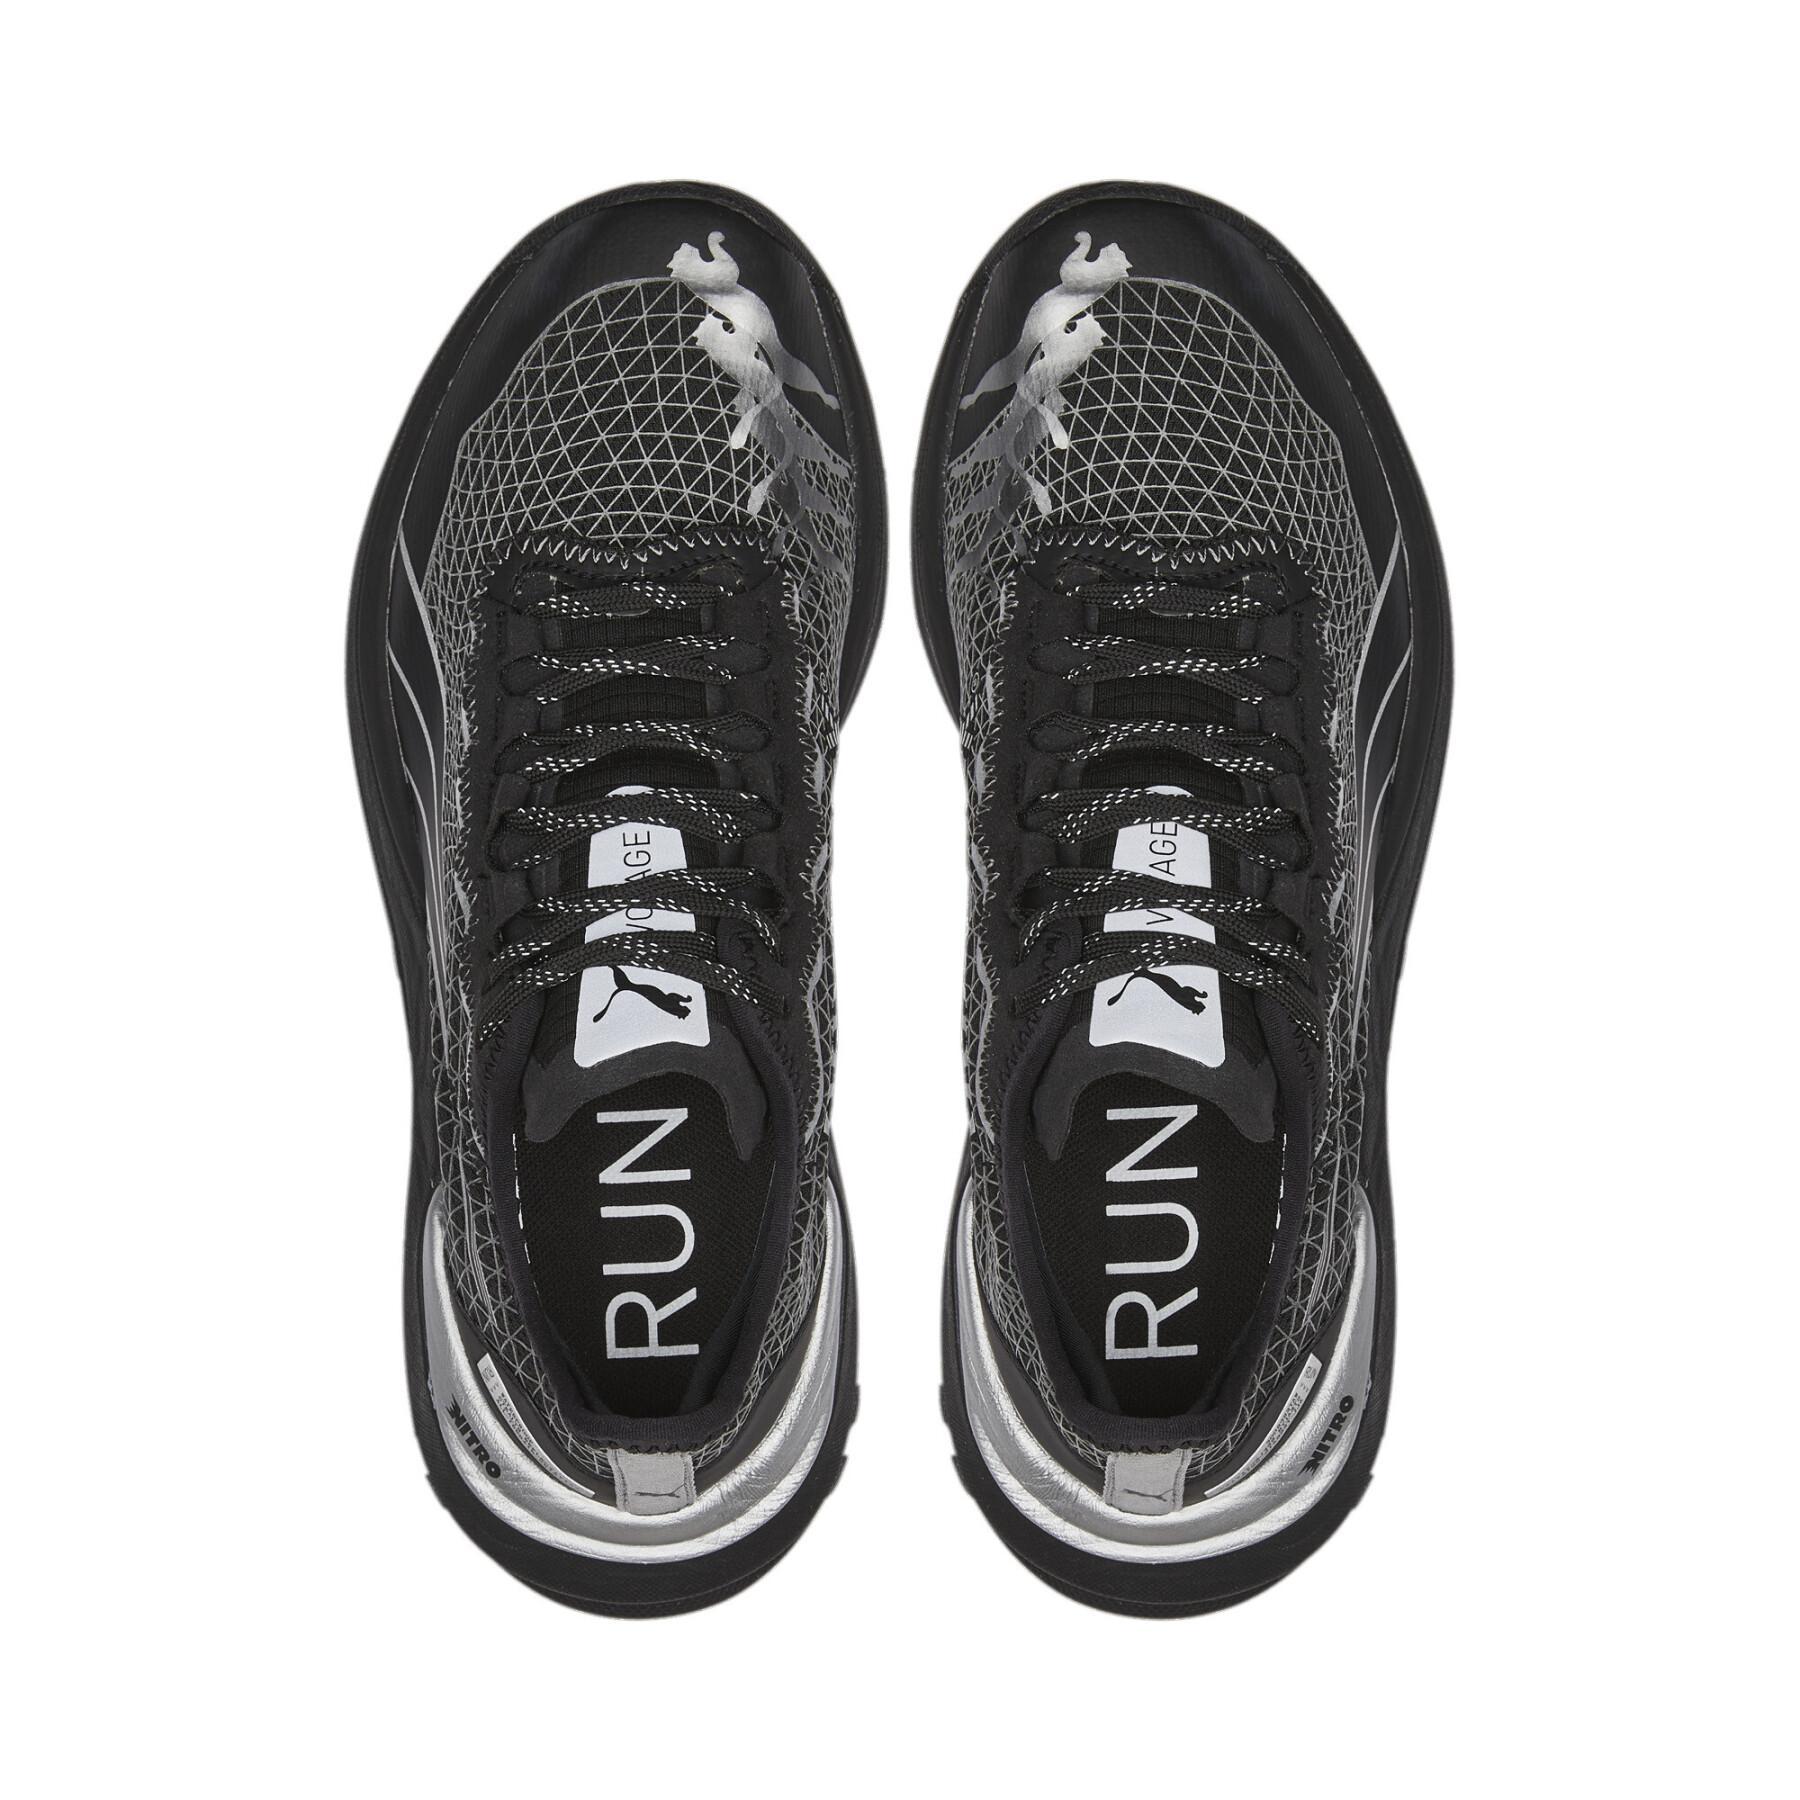 Women's running shoes Puma Voyage Nitro 2 GTX